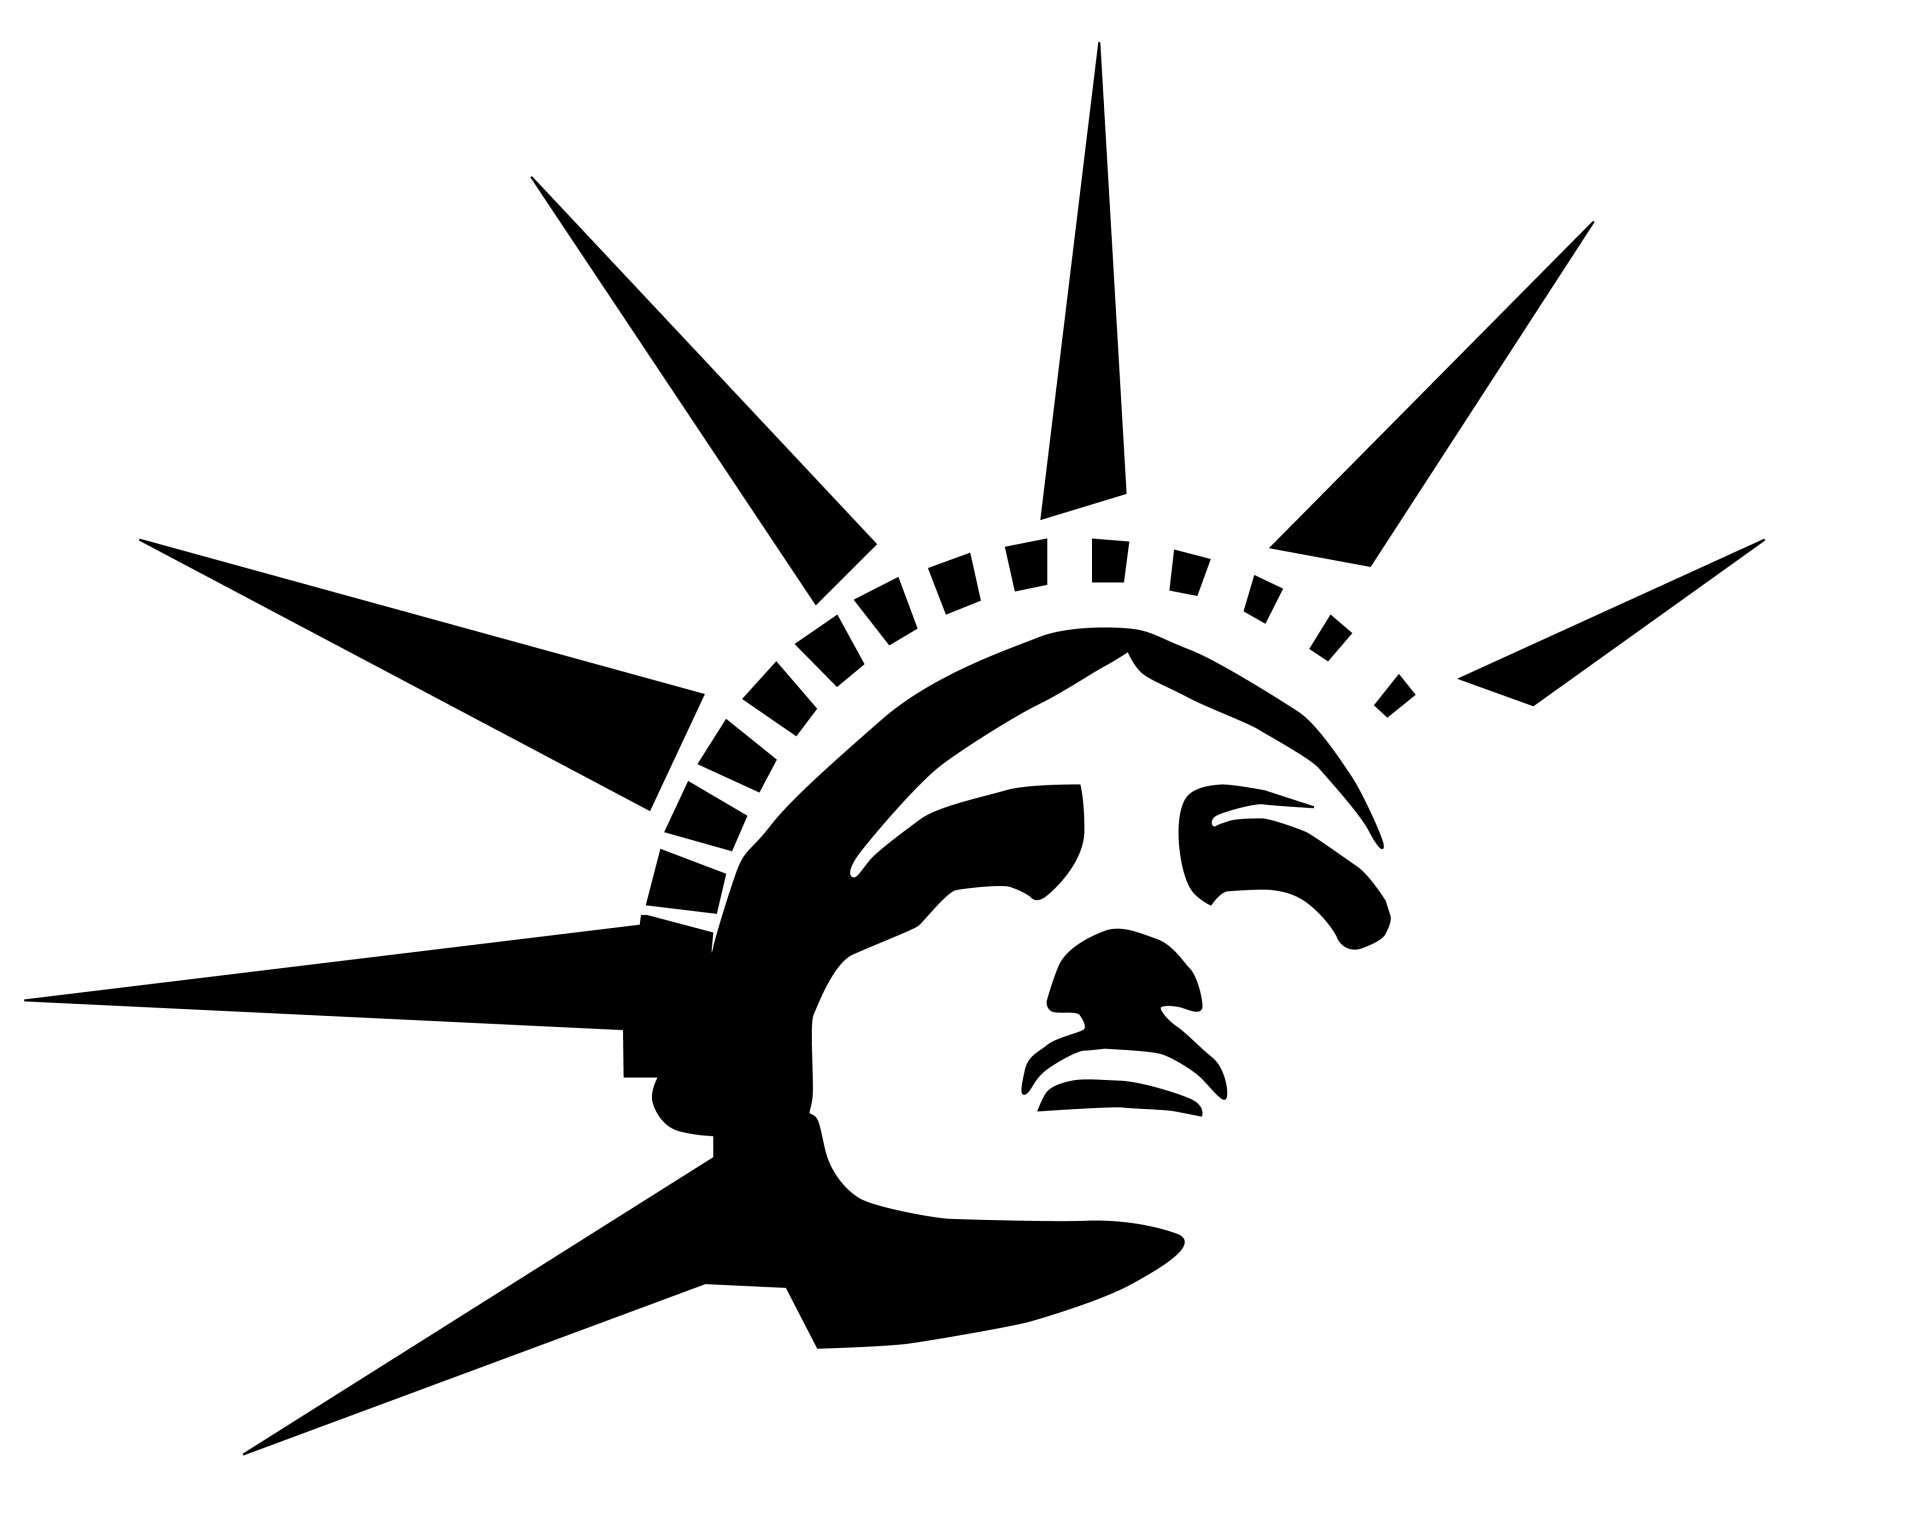 Statue of Liberty Silhouette Logo